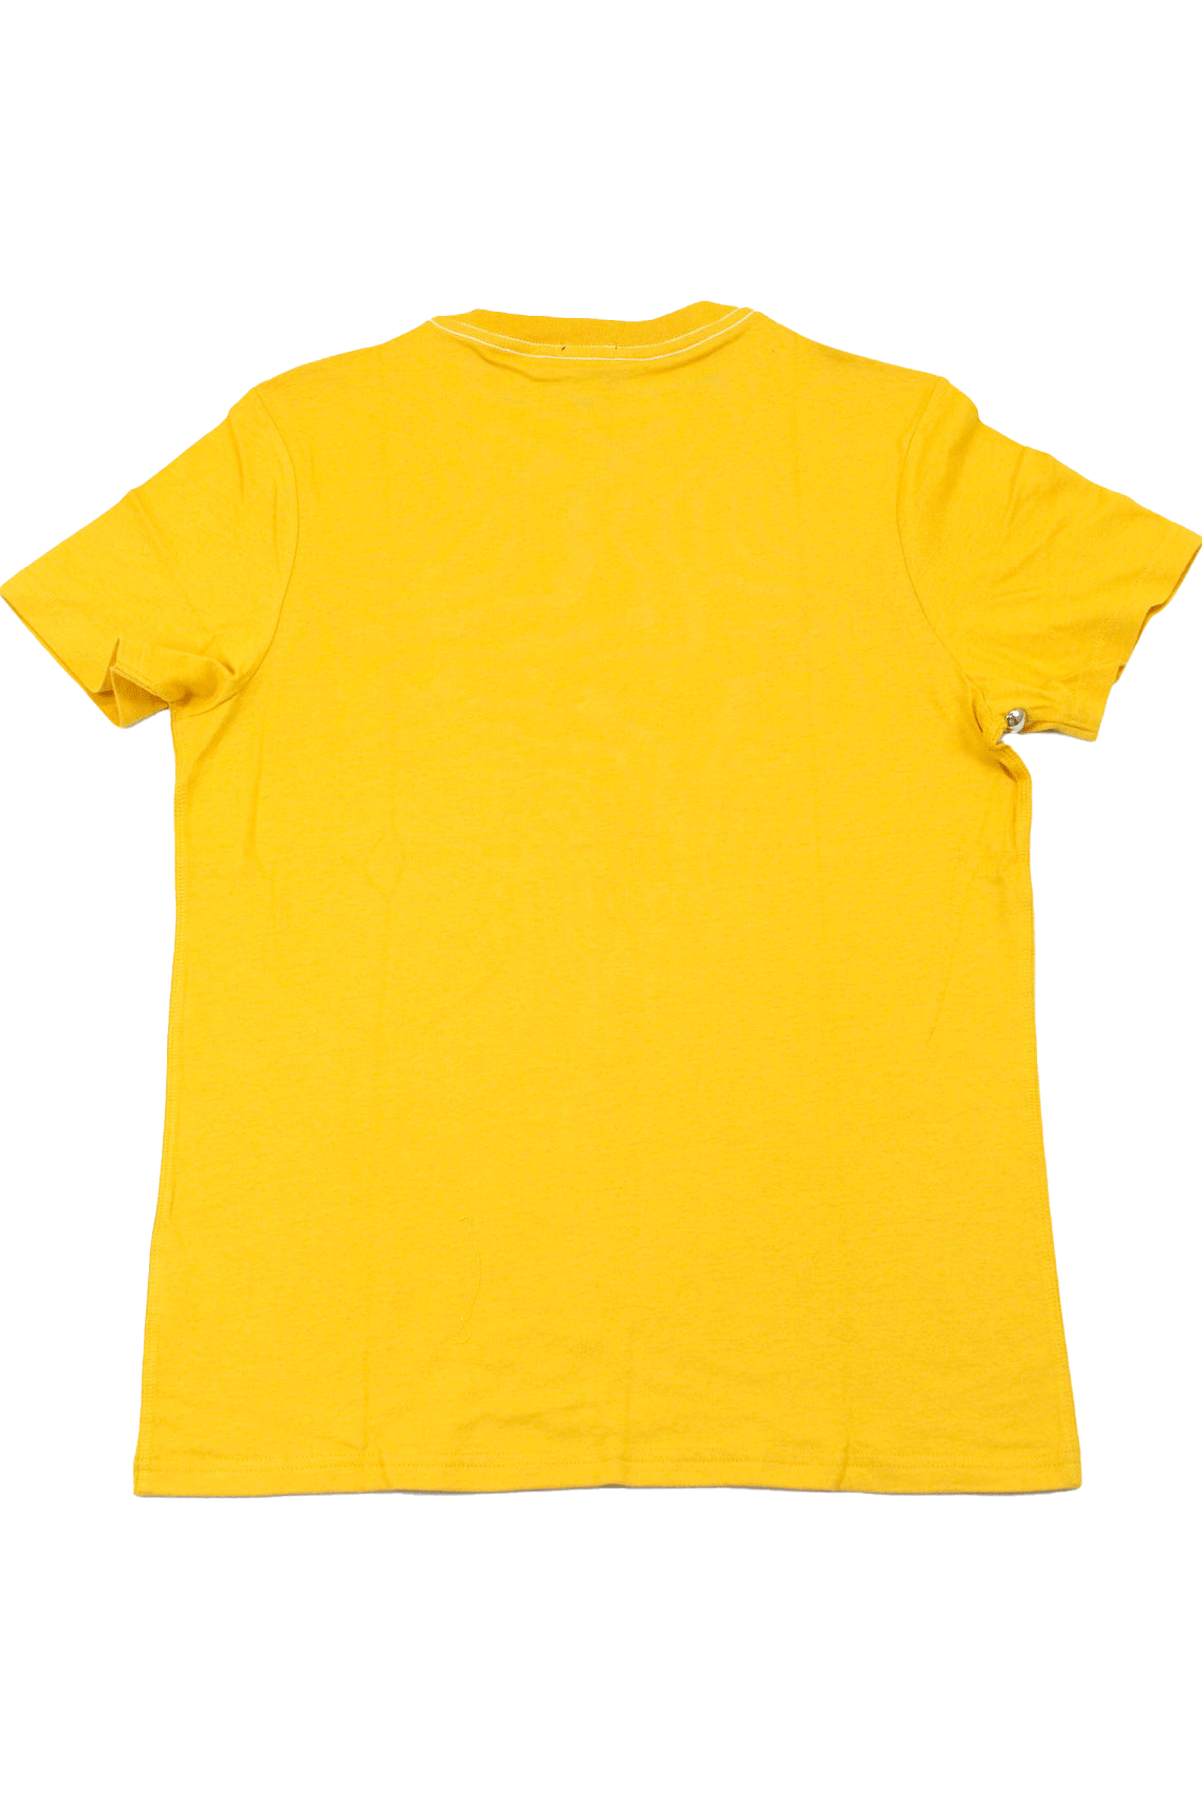 Vertigo Mustard T-Shirt